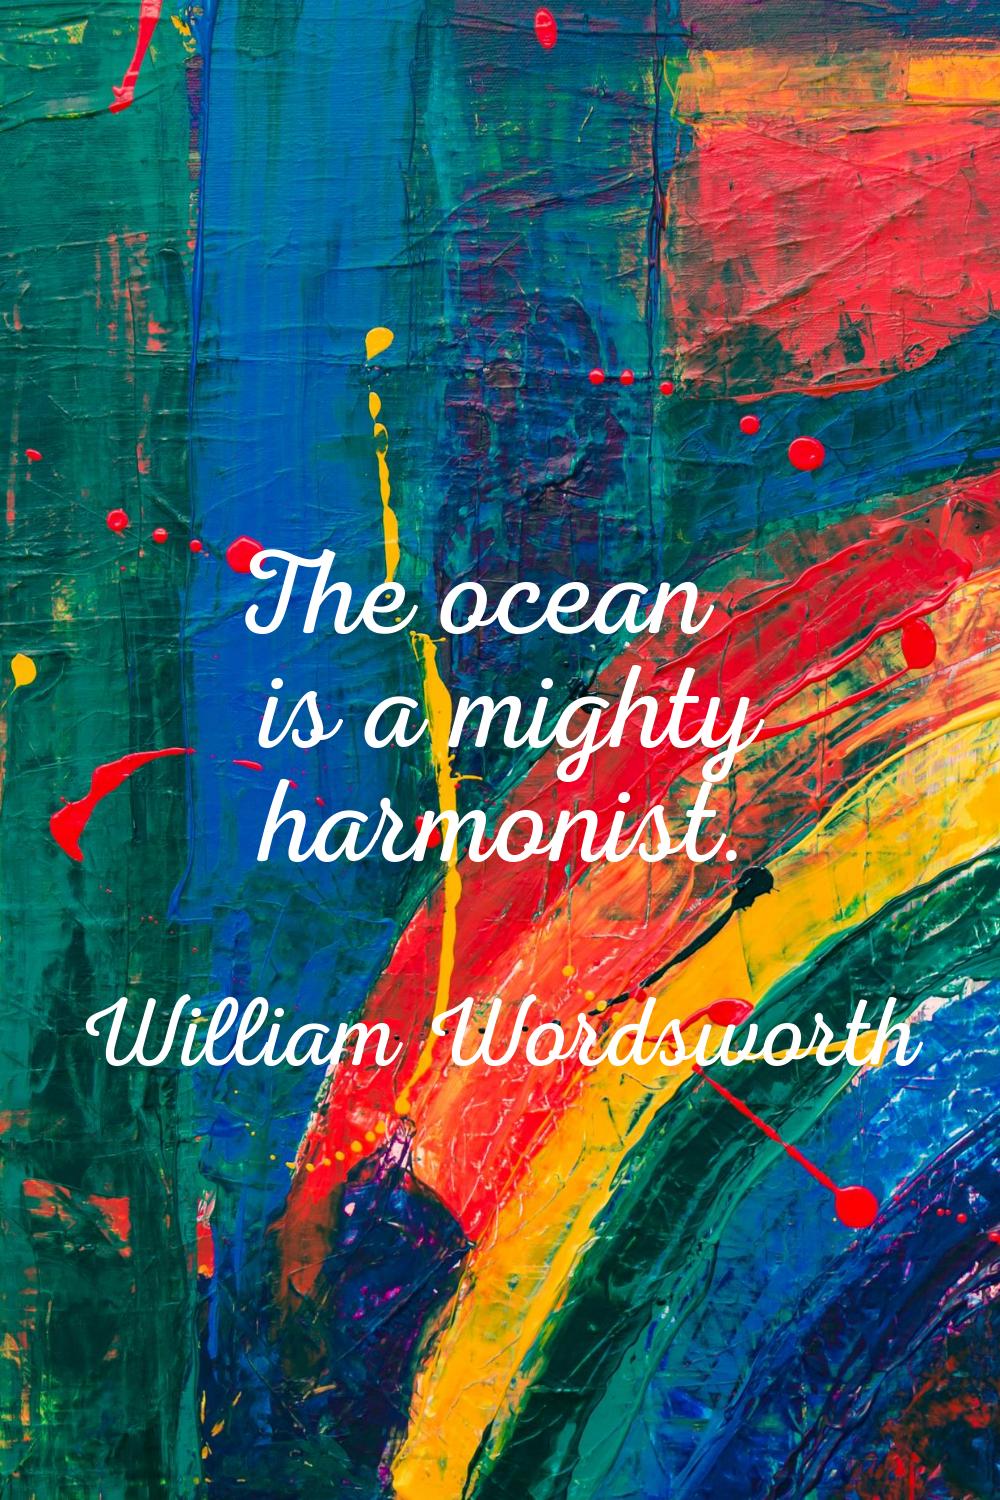 The ocean is a mighty harmonist.